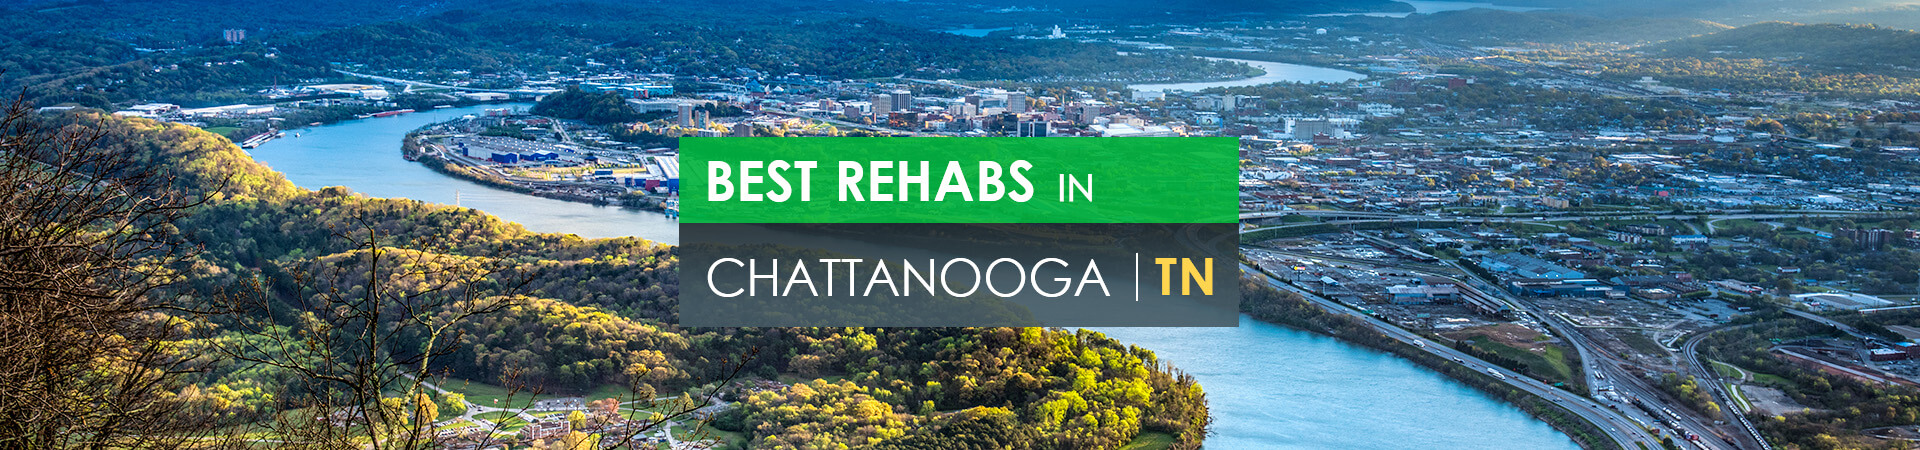 Best rehabs in Chattanooga, TN